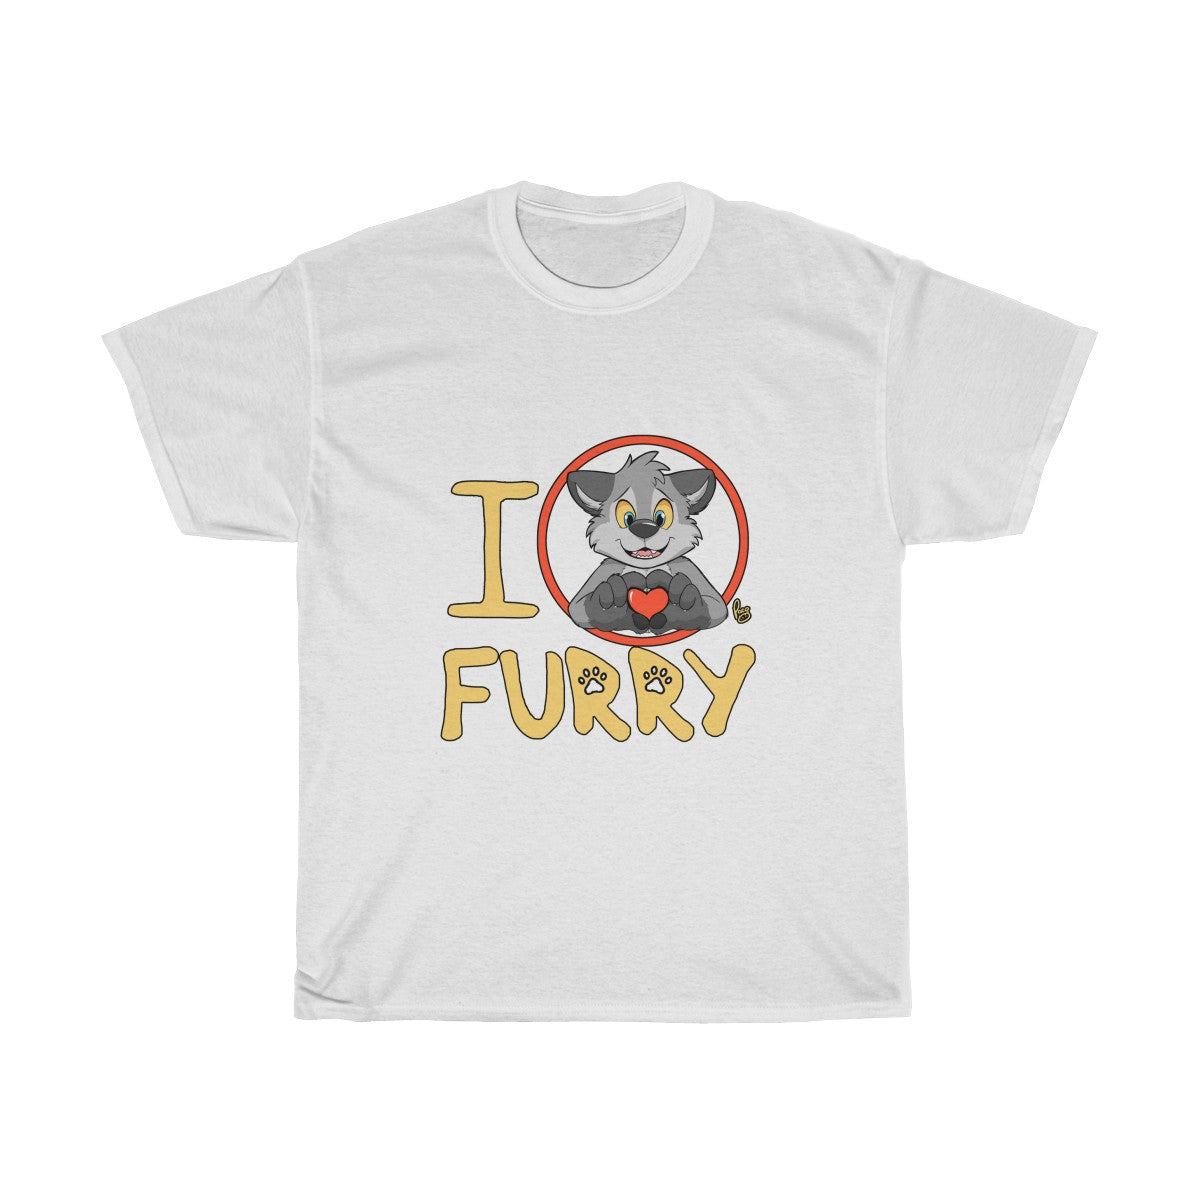 I Wolf Furry - T-Shirt T-Shirt Paco Panda White S 